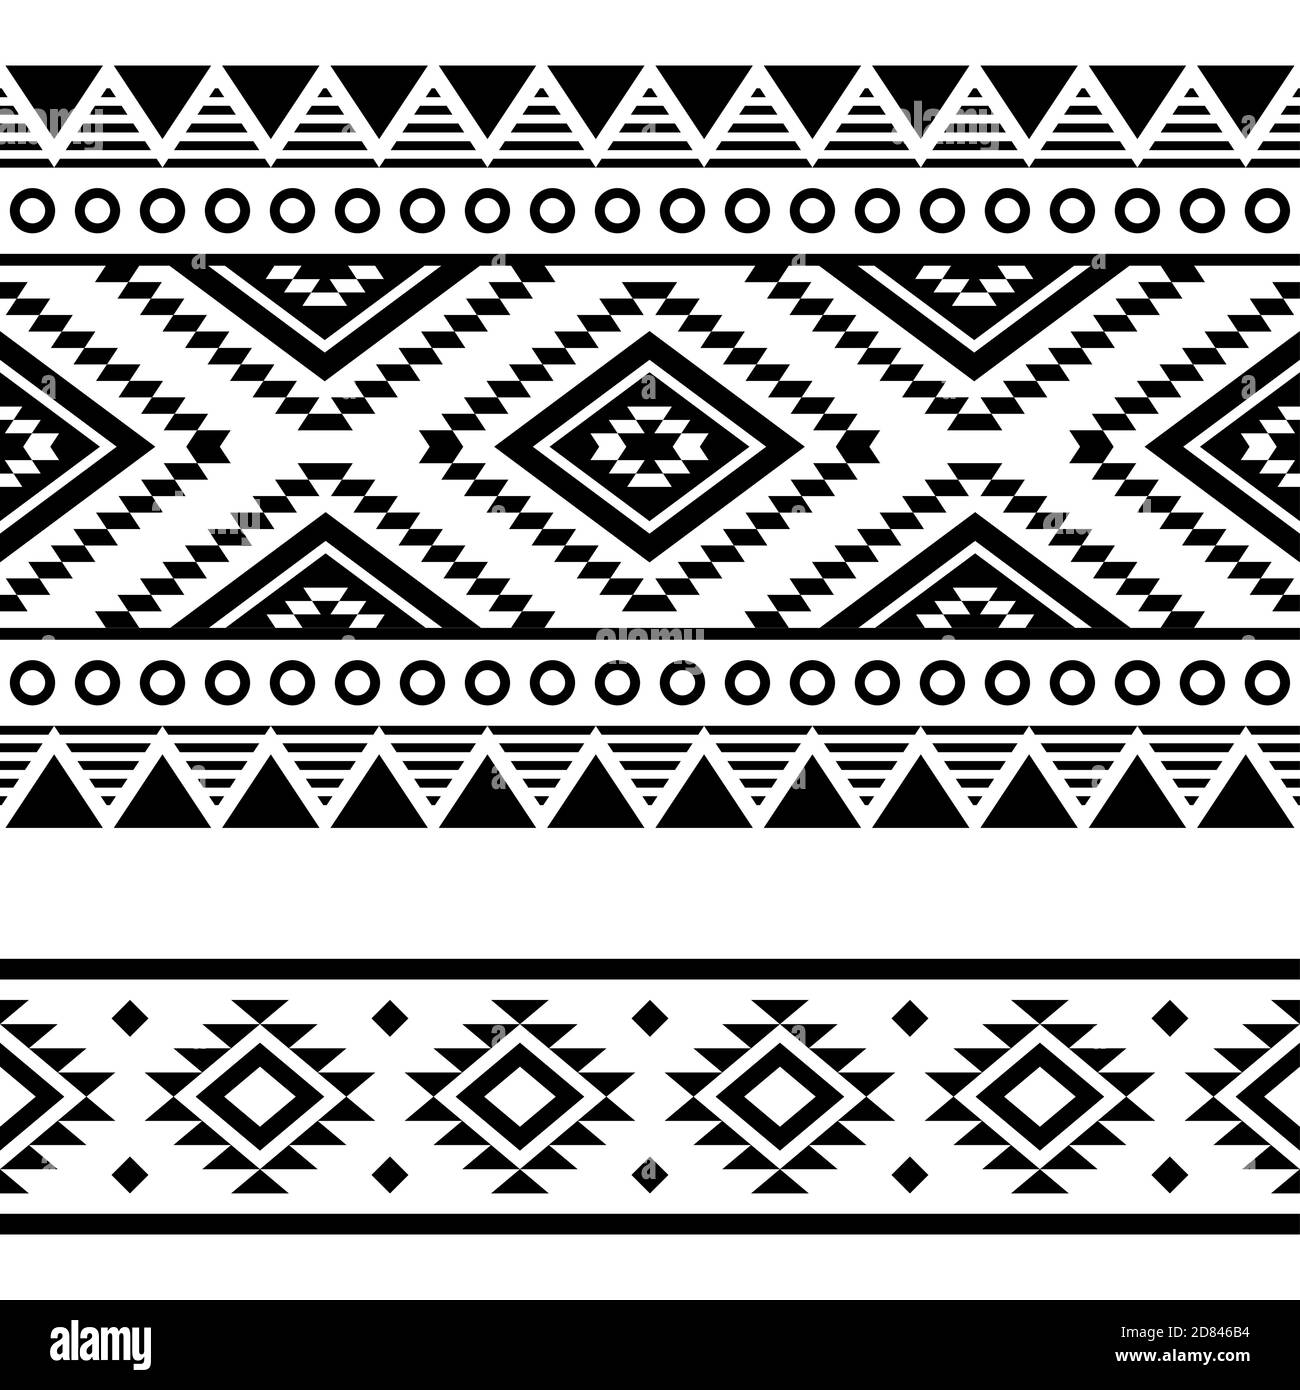 Tribal Patterns Designs